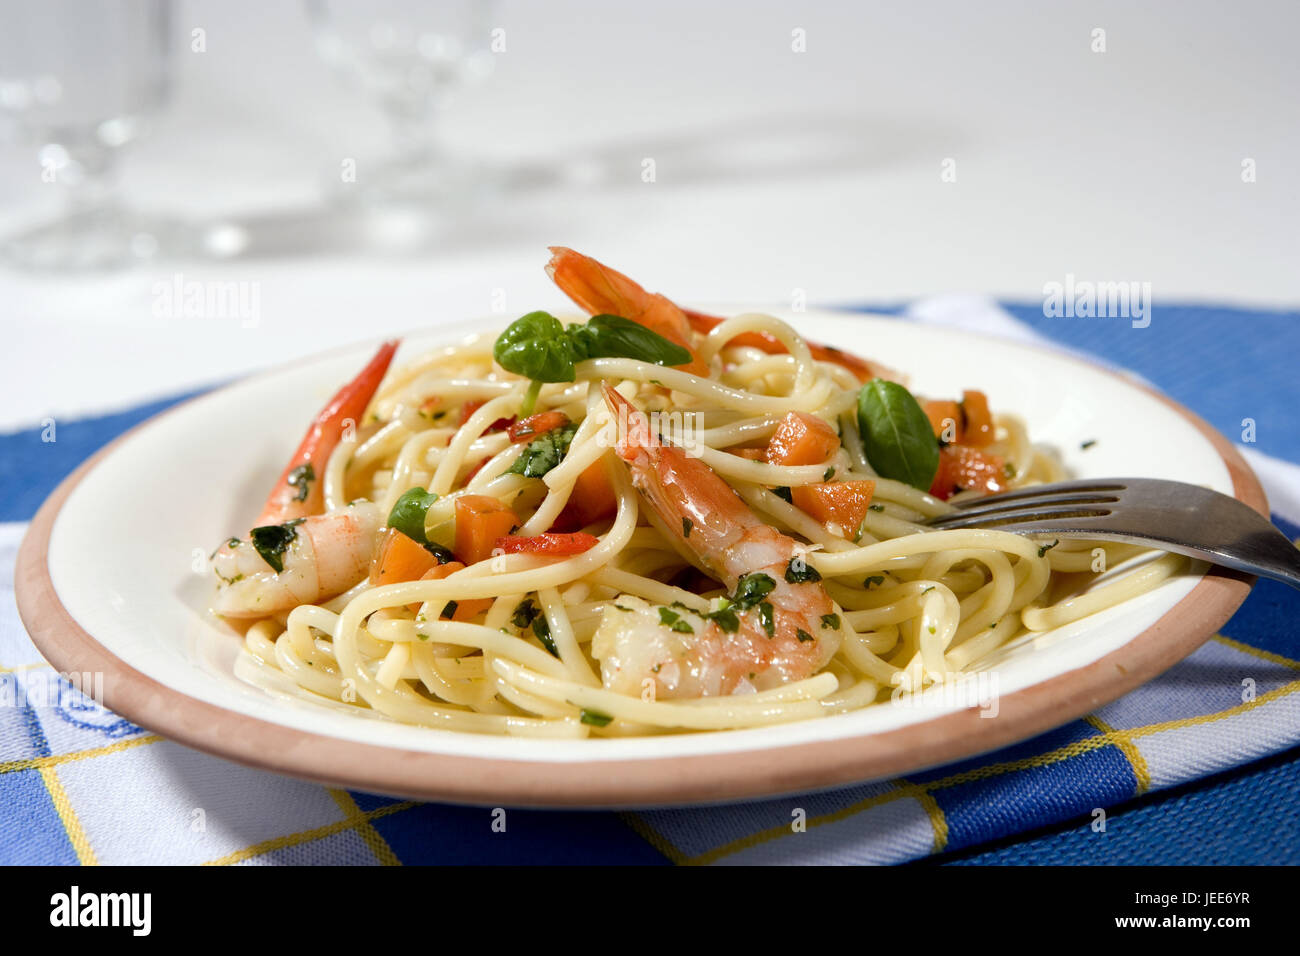 Spaghetti with shrimps, Stock Photo